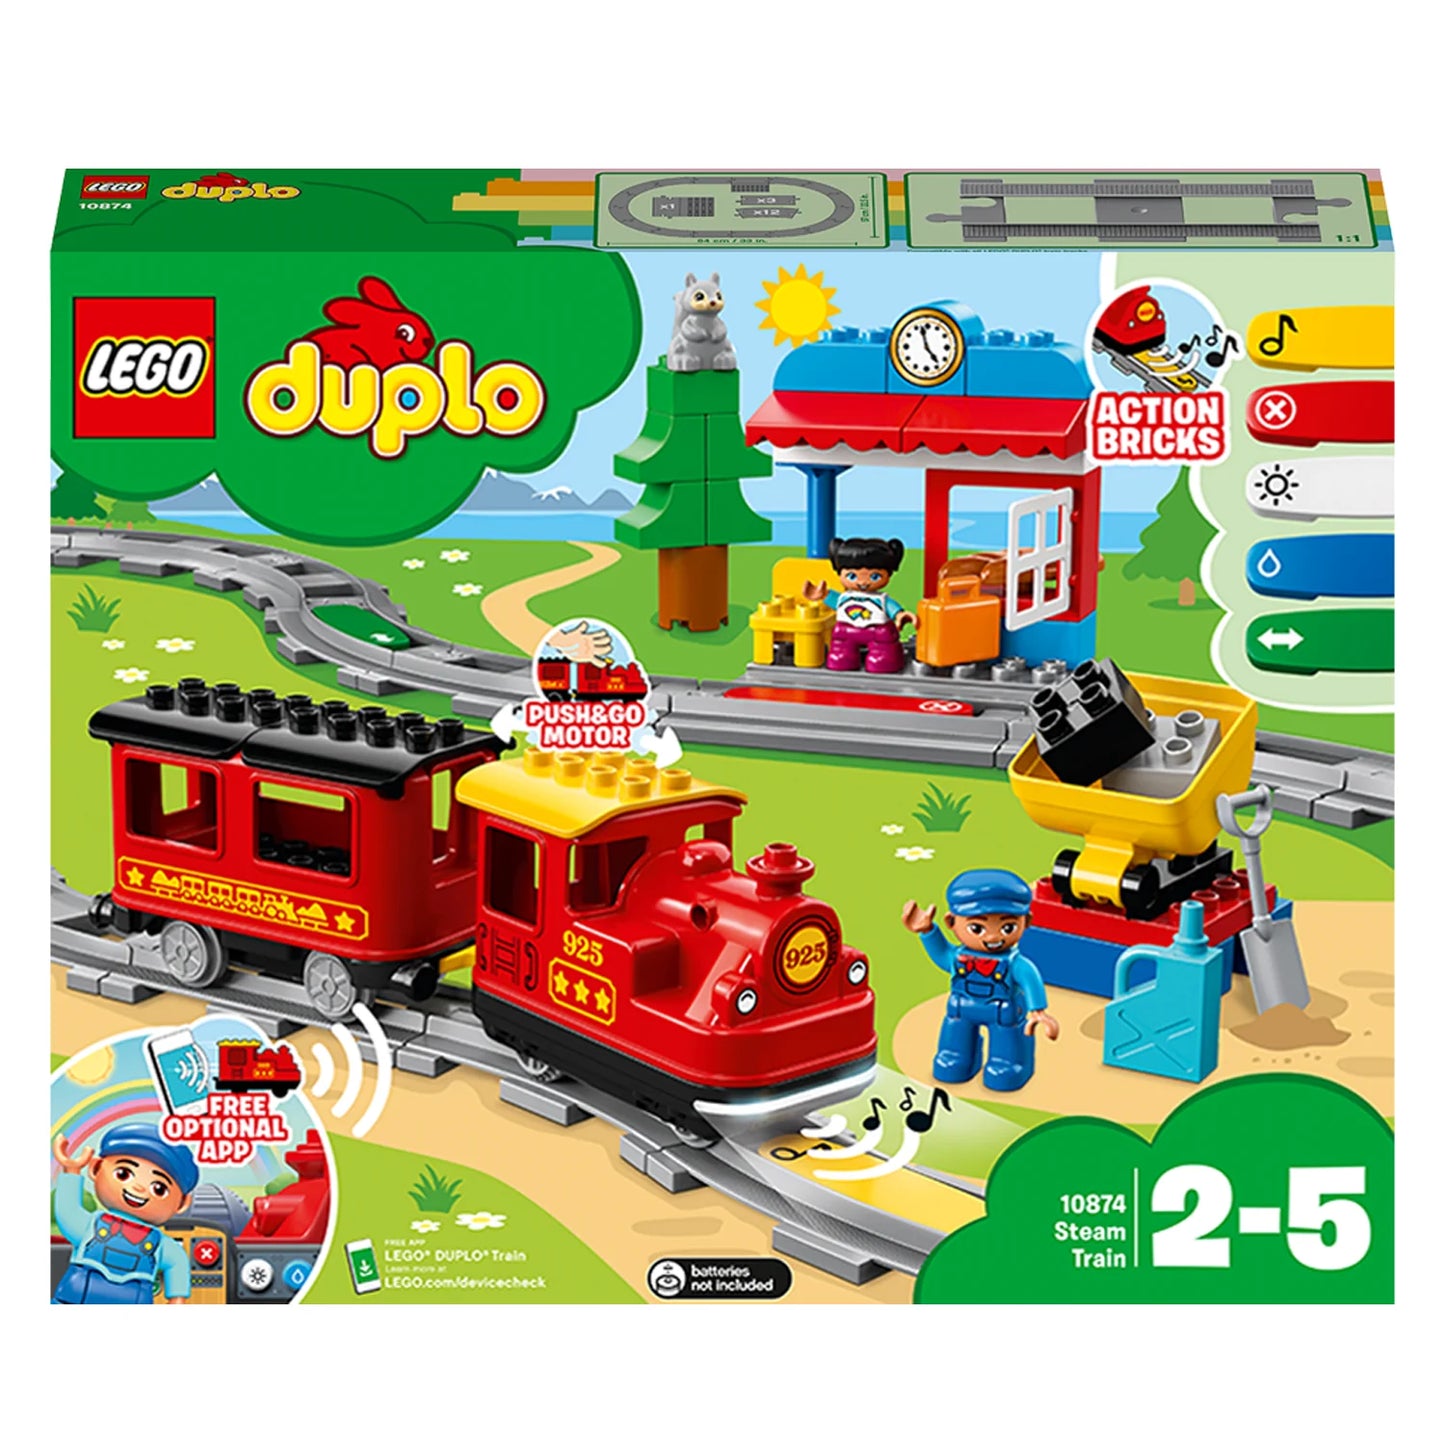 Steam Train LEGO Duplo